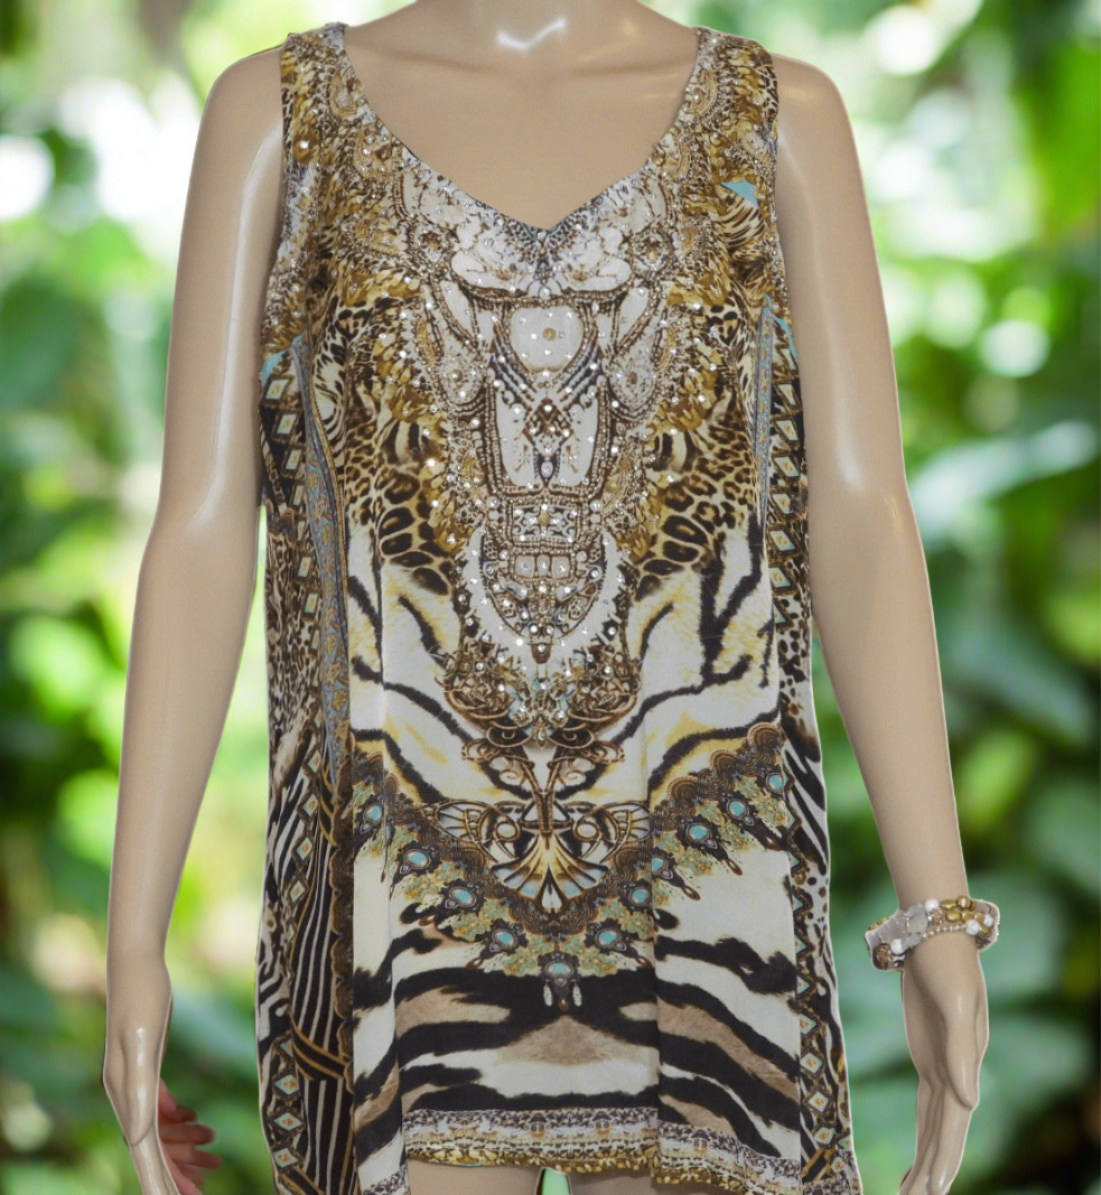 Cheetah silk Embellished Tank Top by Fashion spectrum - Kaftans that Bling